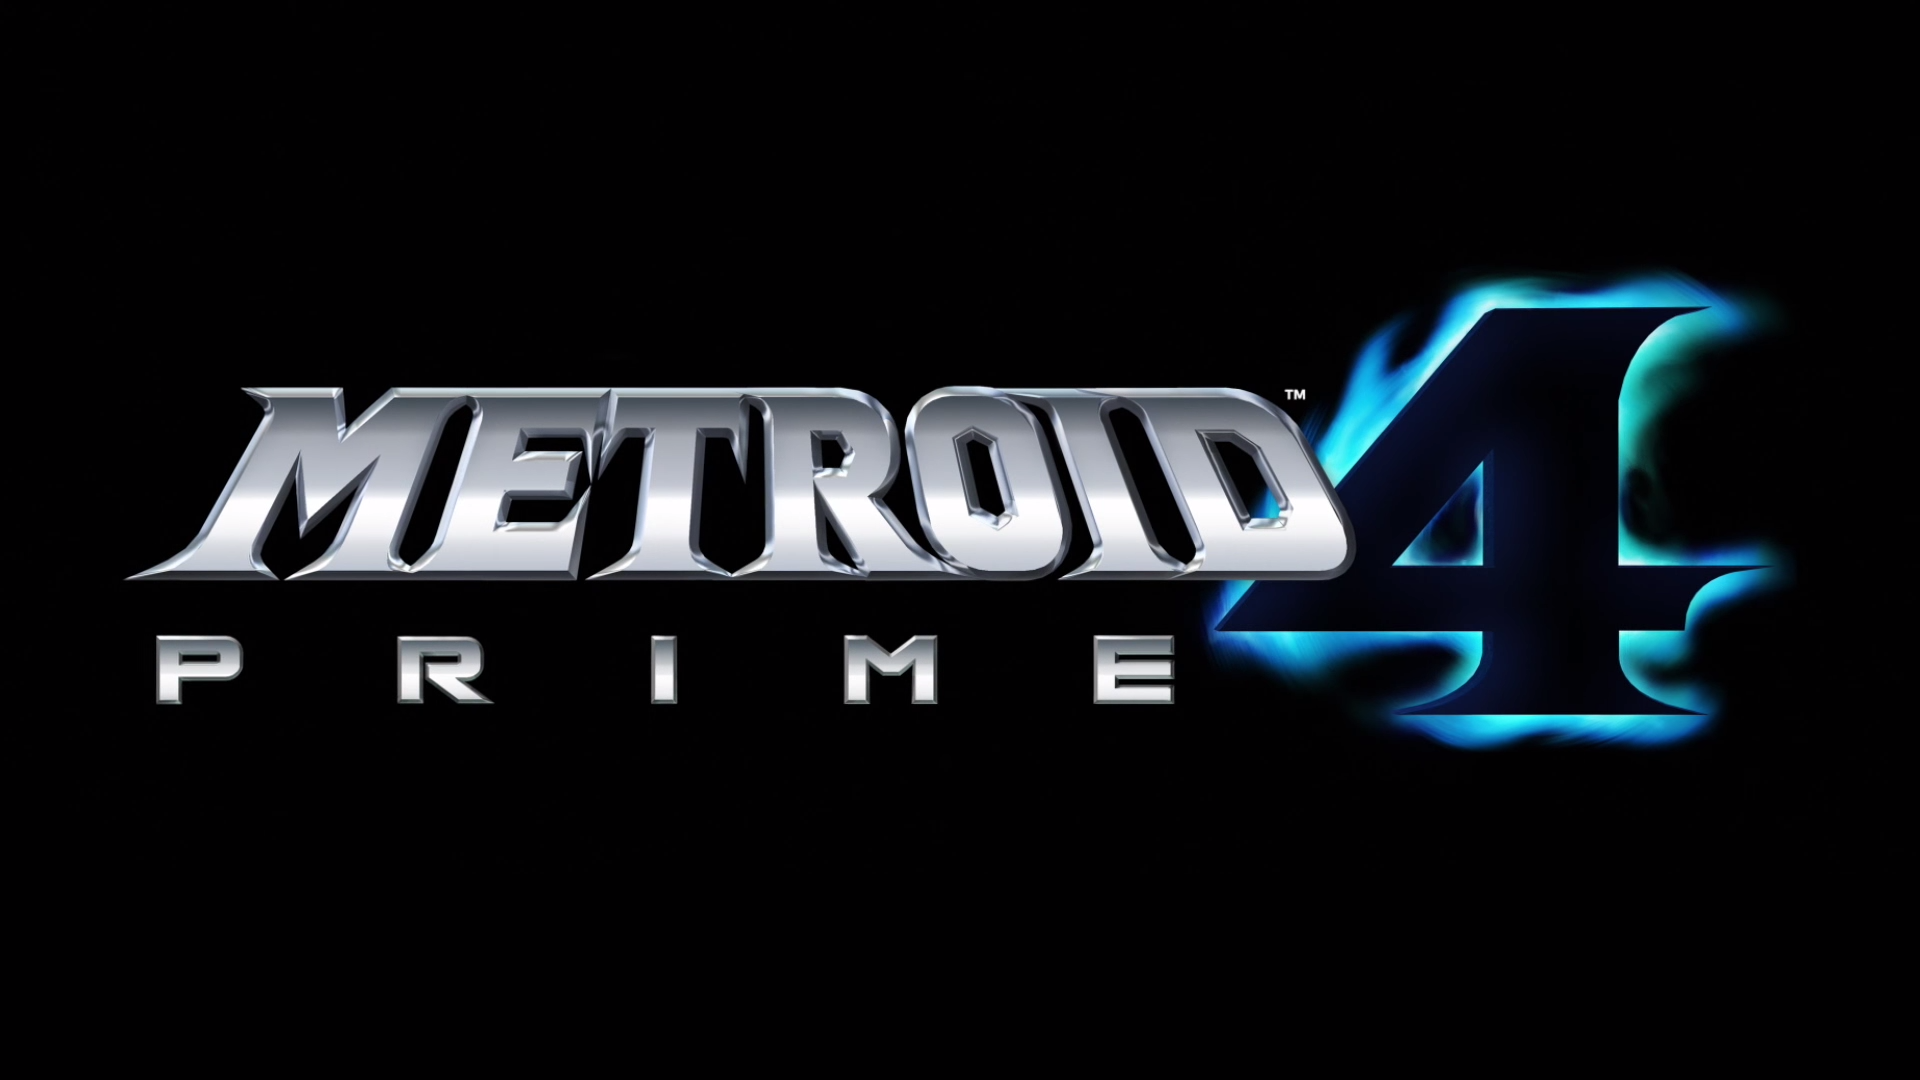 I-Metroid Prime 4